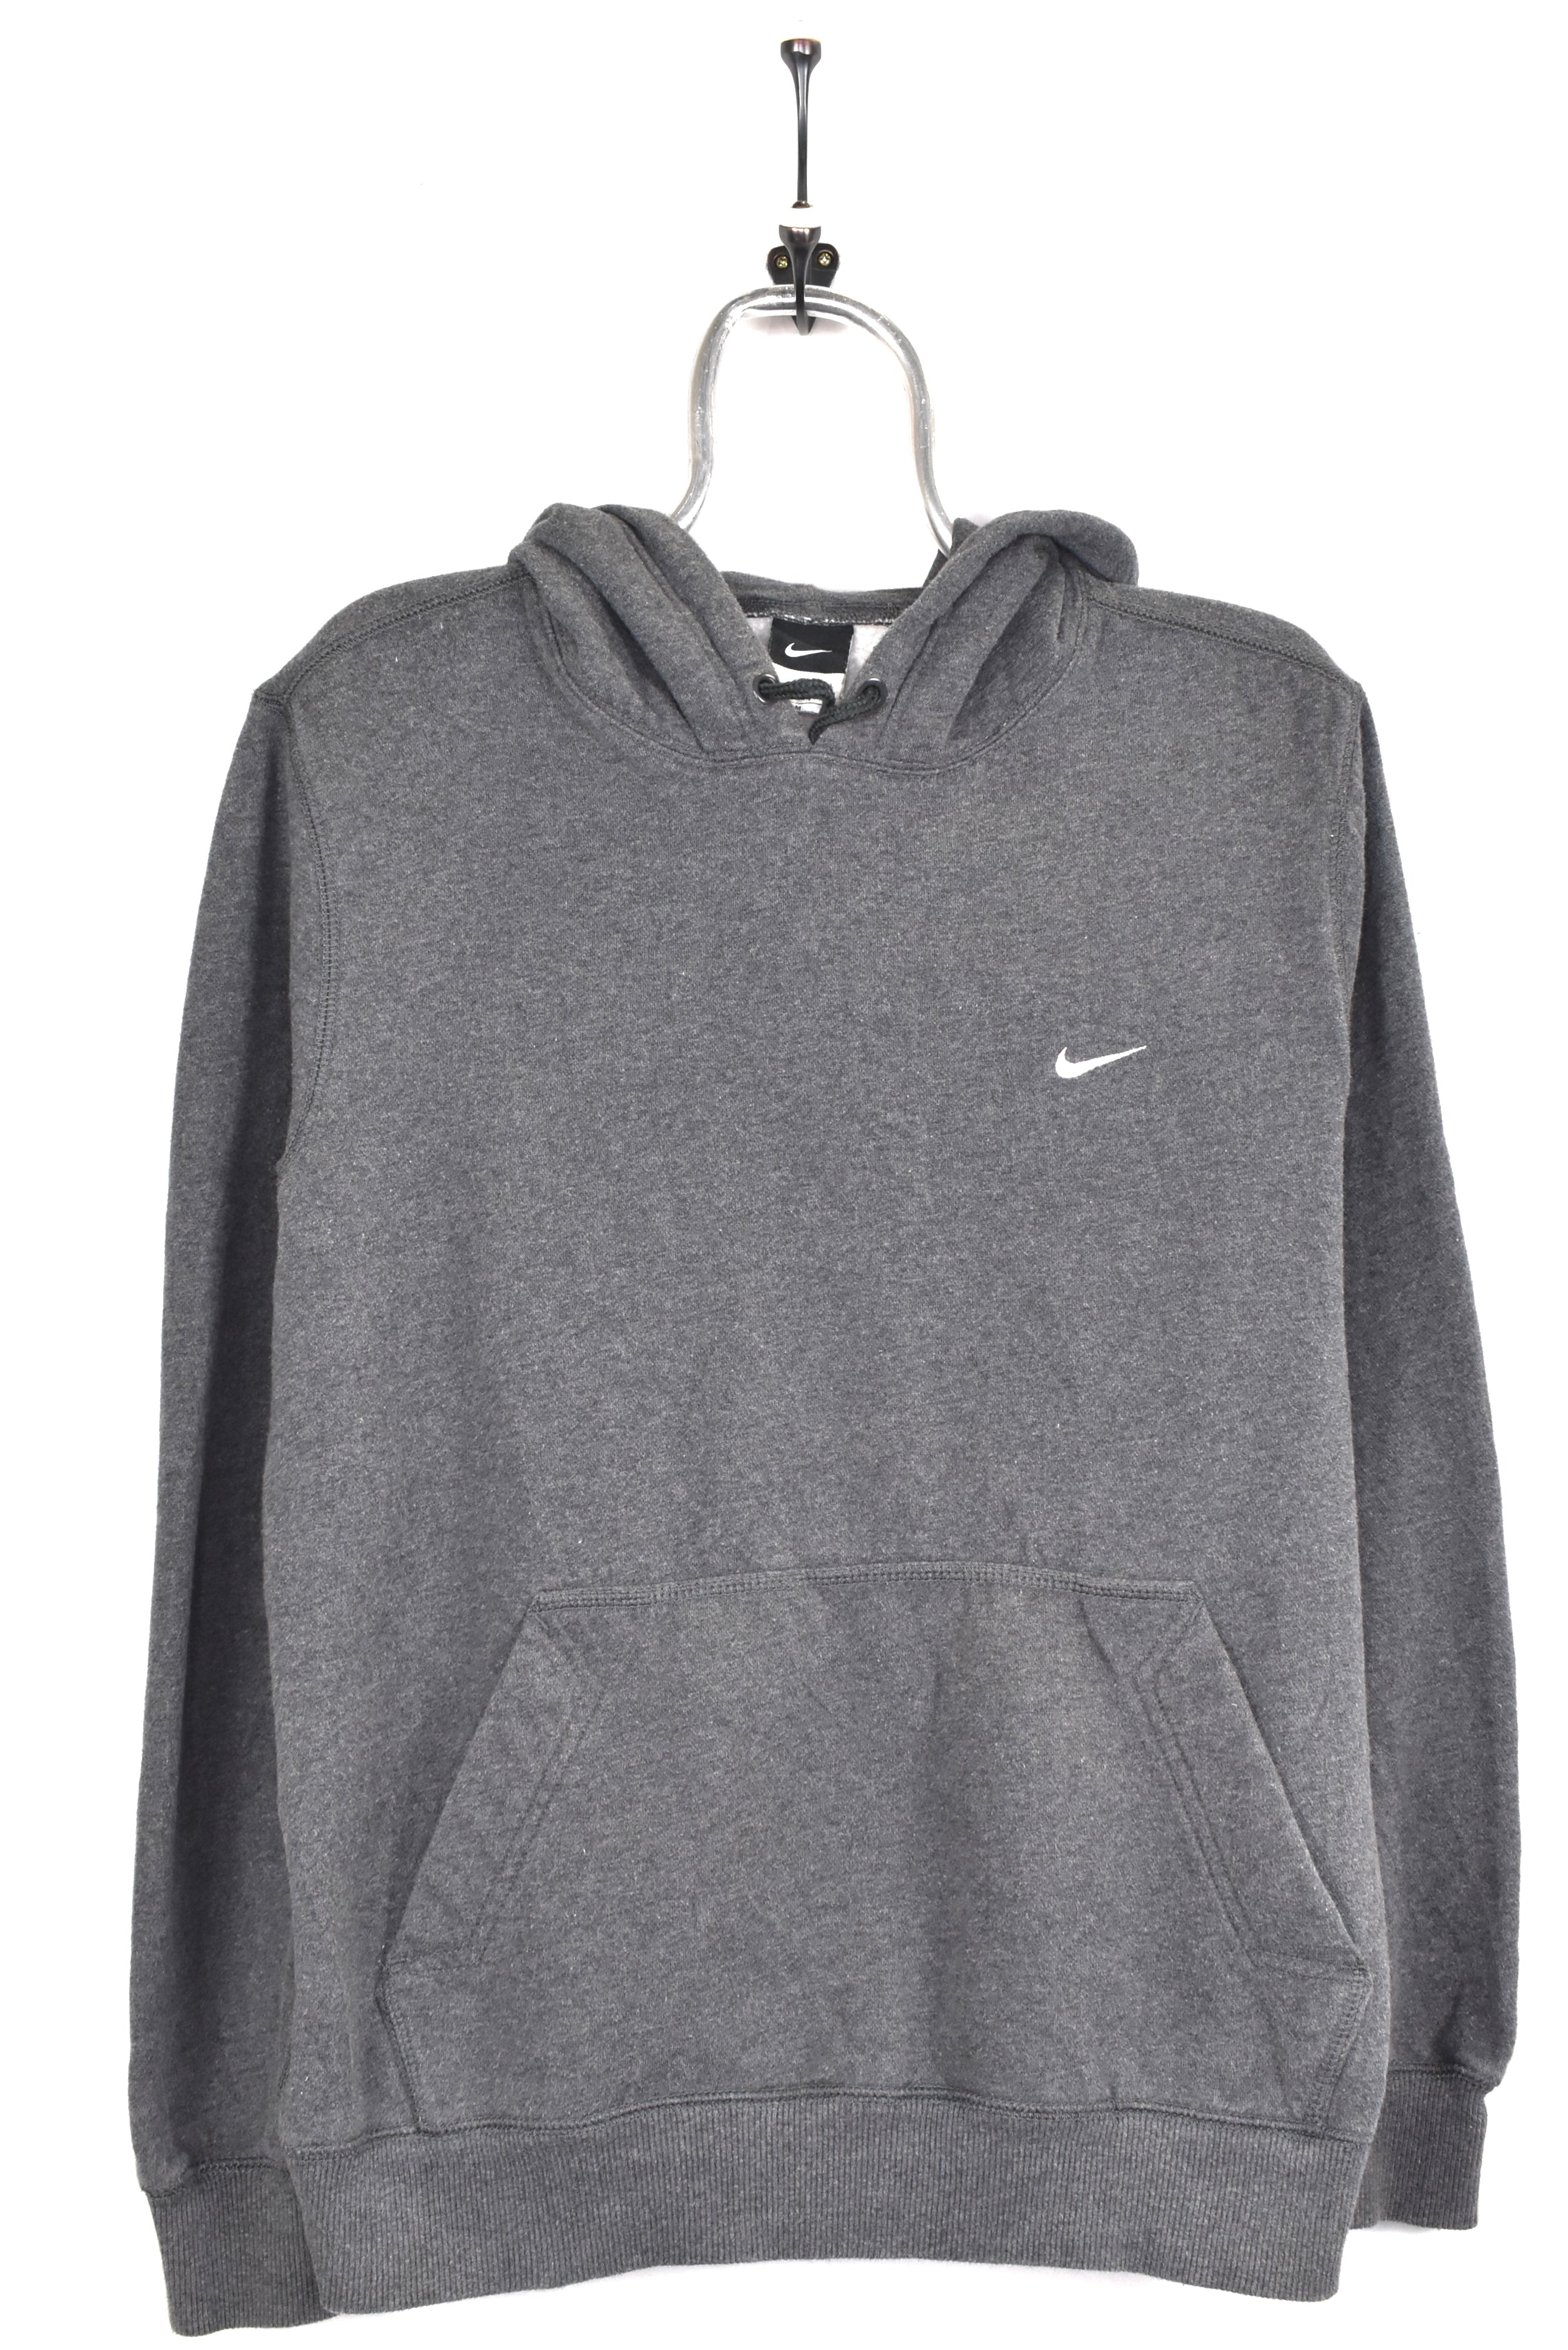 Vintage Nike hoodie, grey embroidered sweatshirt - AU Small NIKE